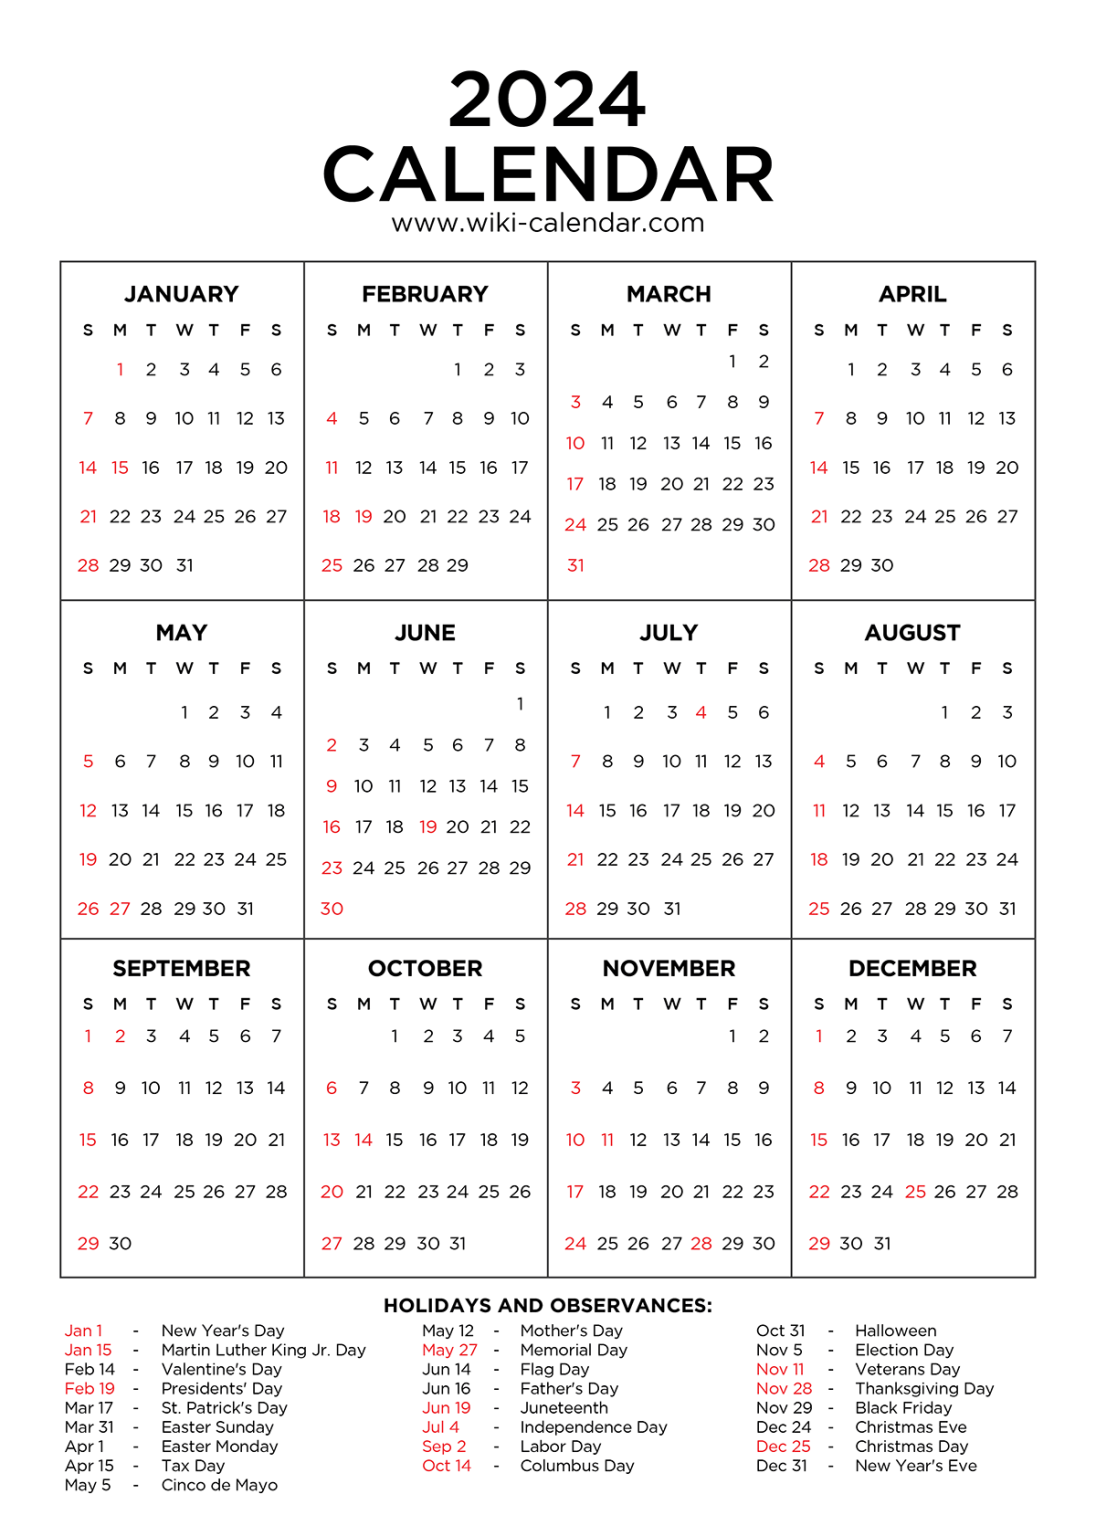 Year 2024 Calendar Printable With Holidays Wiki Calendar - Free Printable 2024 Calendar With Holidays And Notes